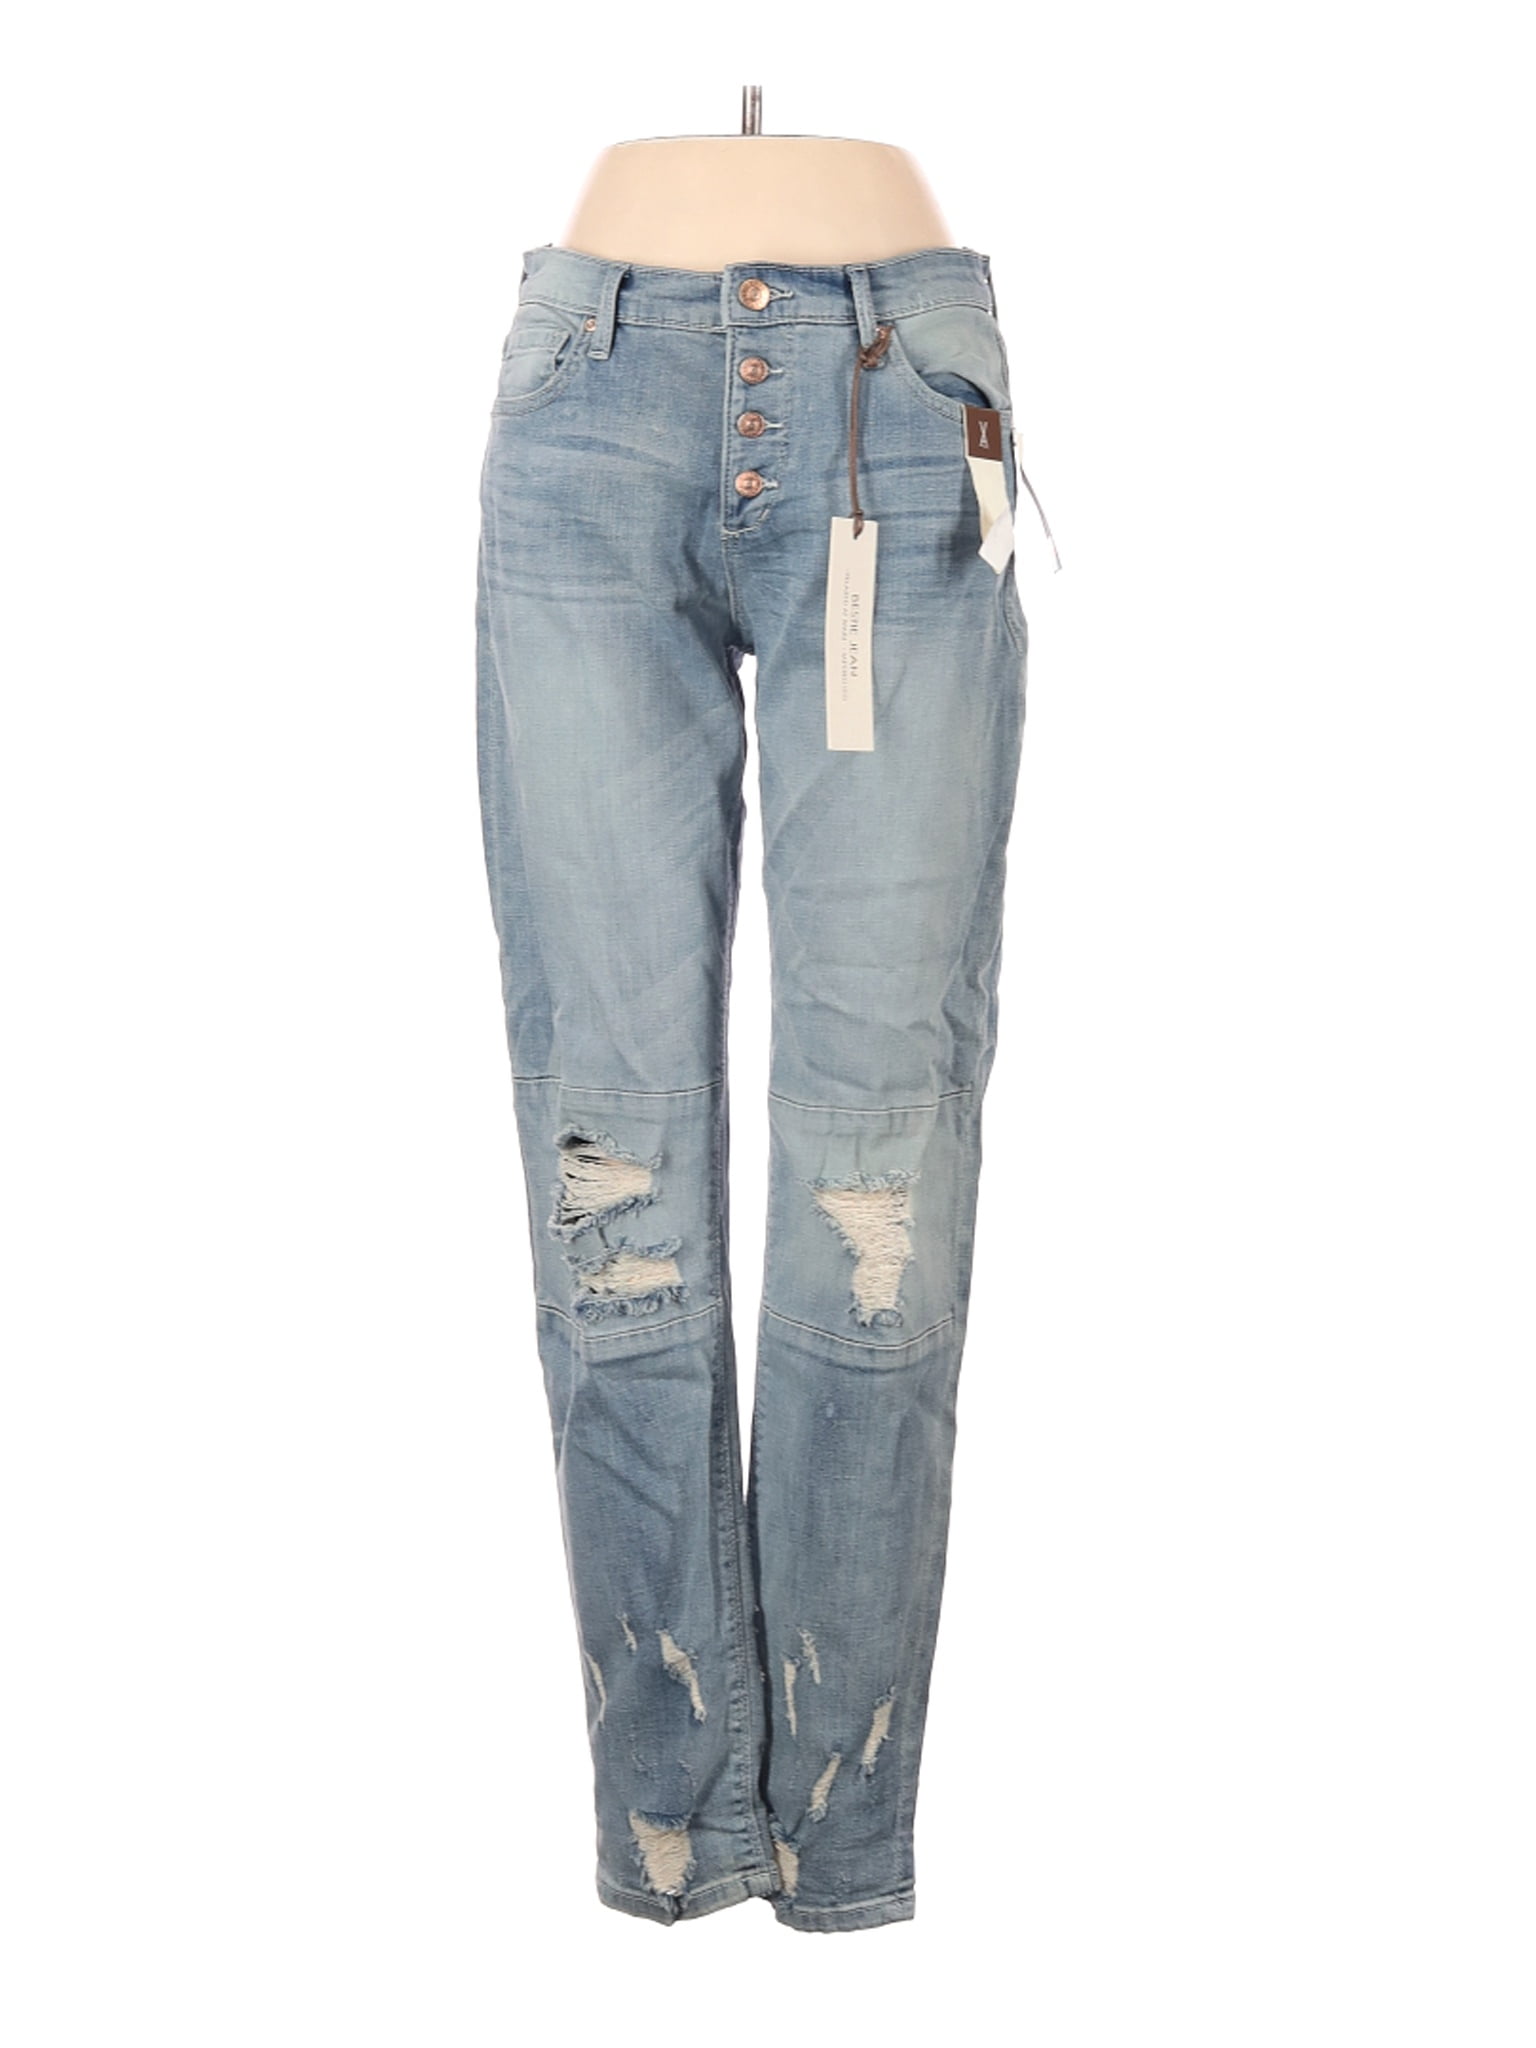 vintage x america jeans